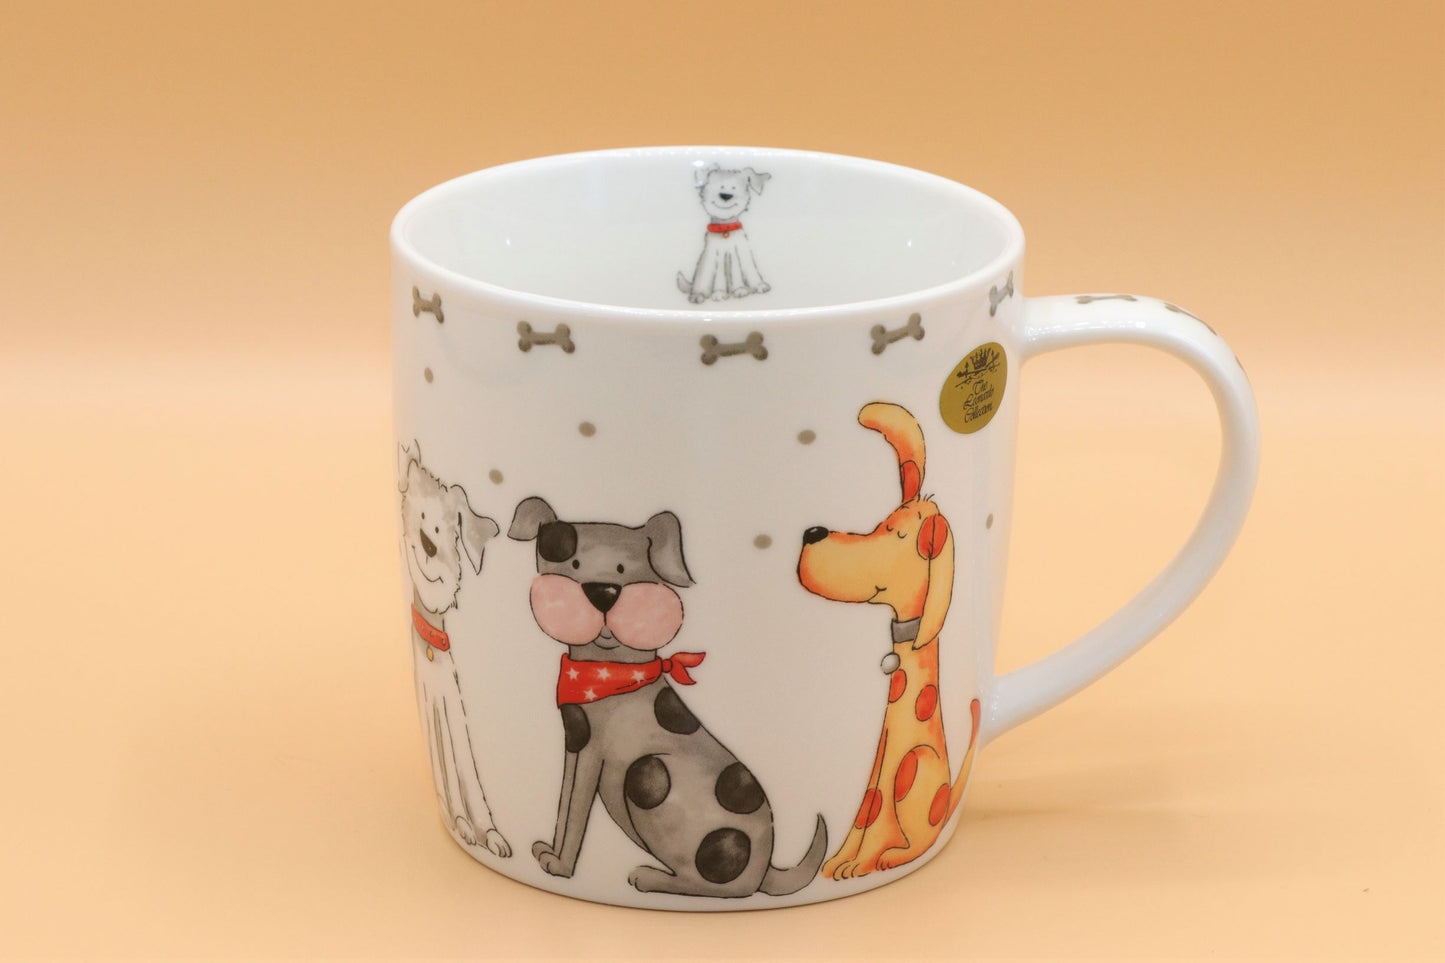 Cartoon Dog & Cat Themed Mug